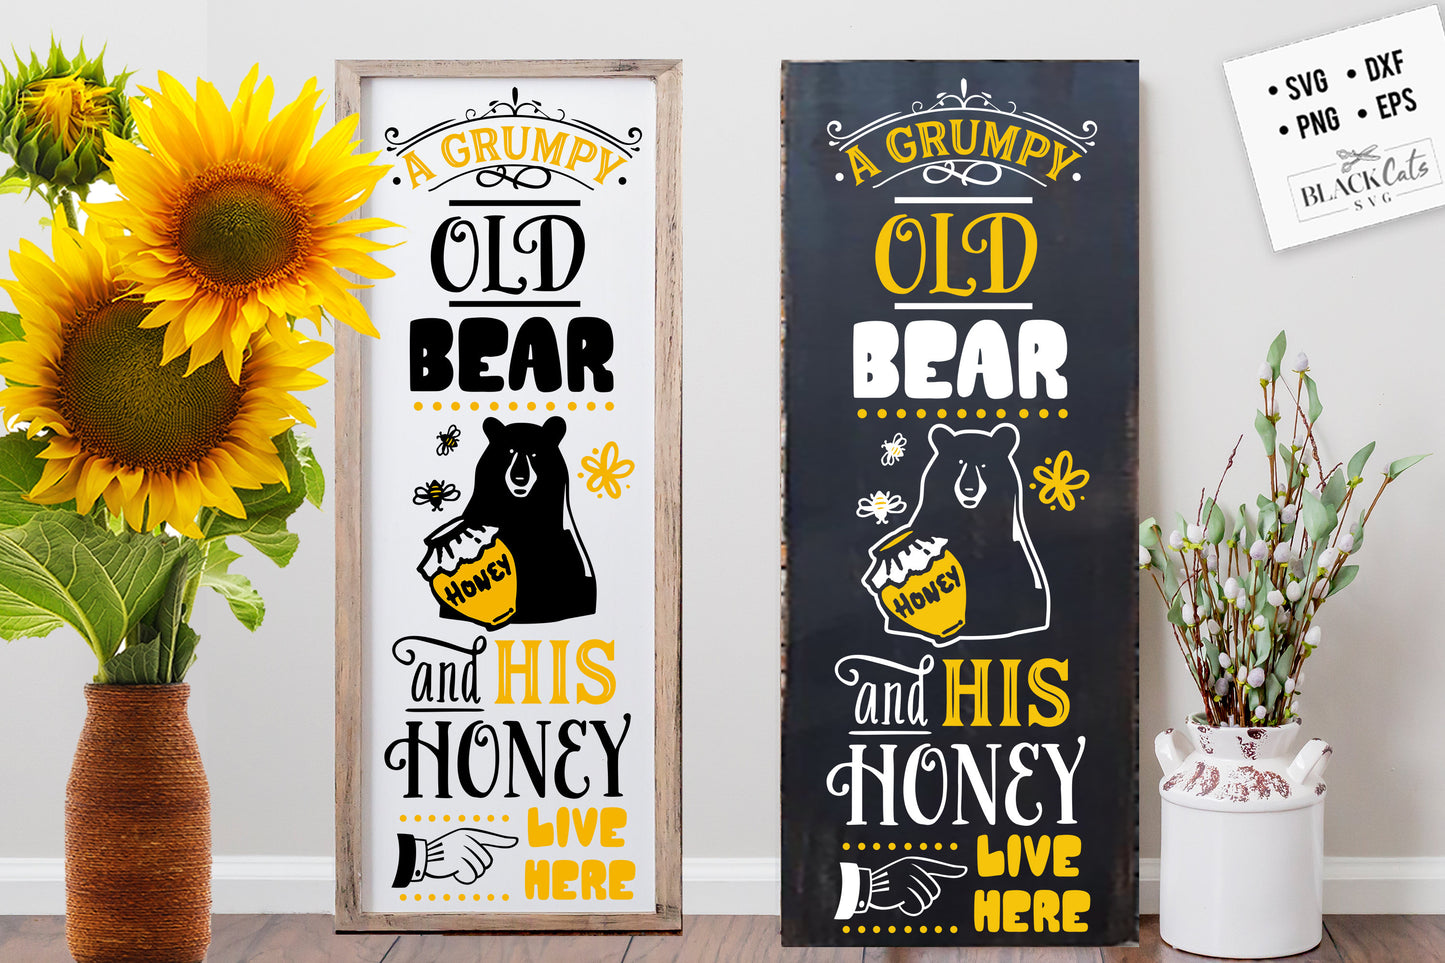 A grumpy old bear lives here svg, Sunflower porch sign svg, sunflower poster svg, sunflower svg, sunflower vertical sign svg